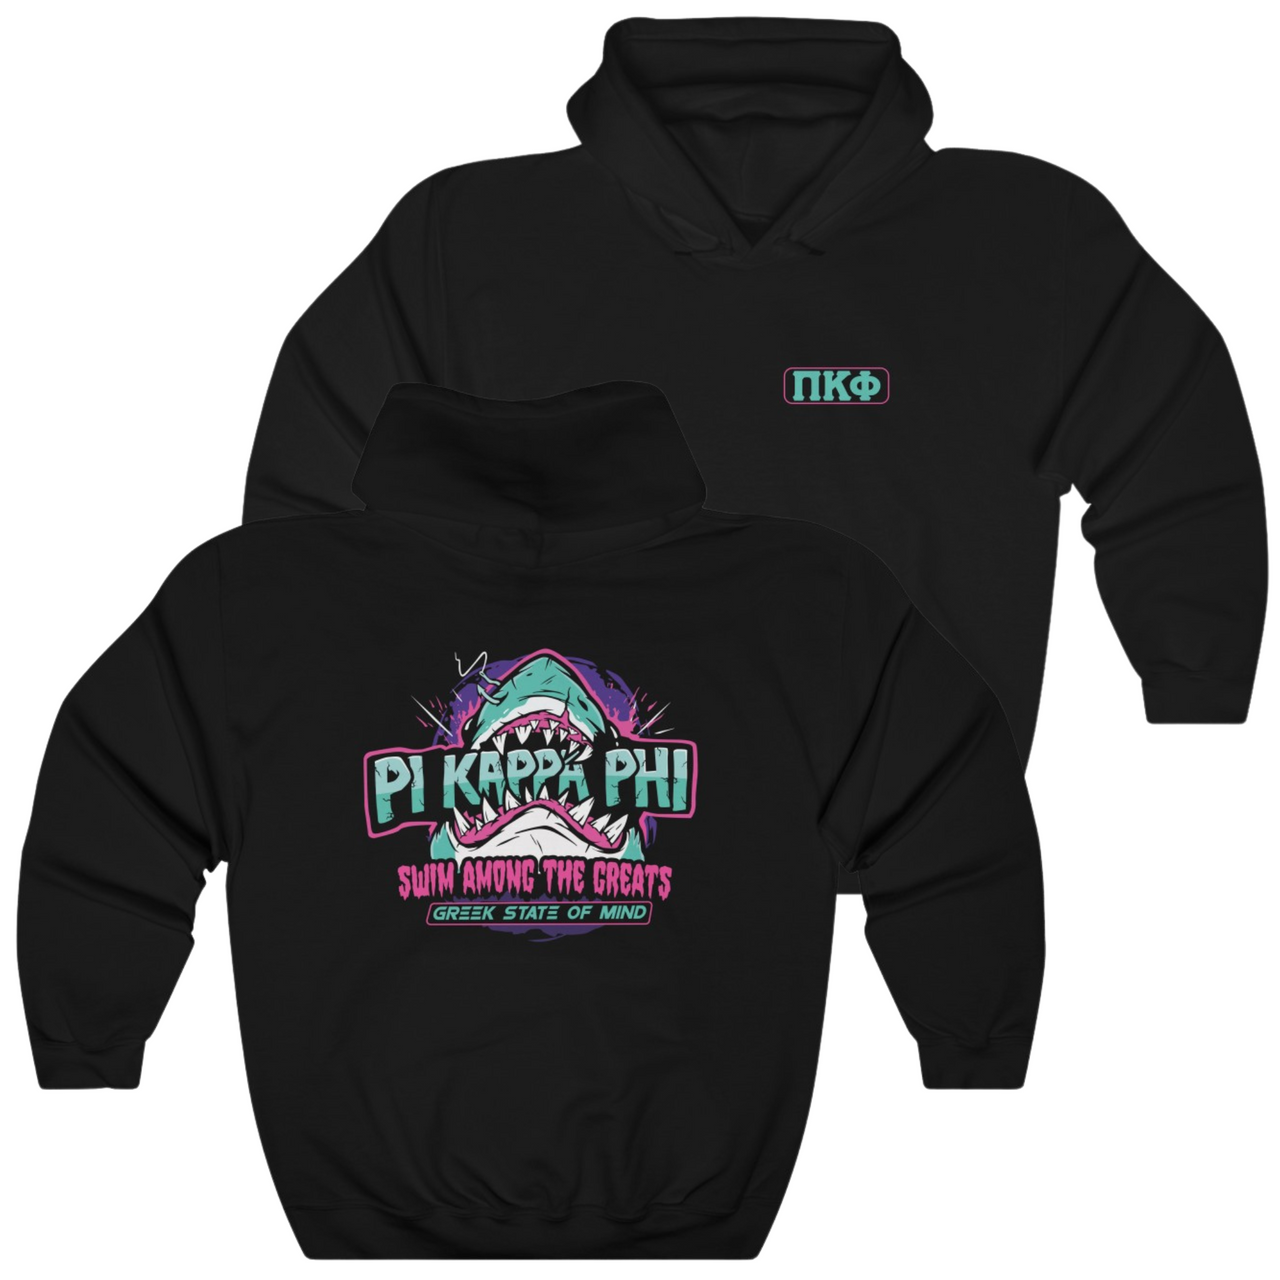 Black Pi Kappa Phi Graphic Hoodie | The Deep End | Pi Kappa Phi Apparel and Merchandise